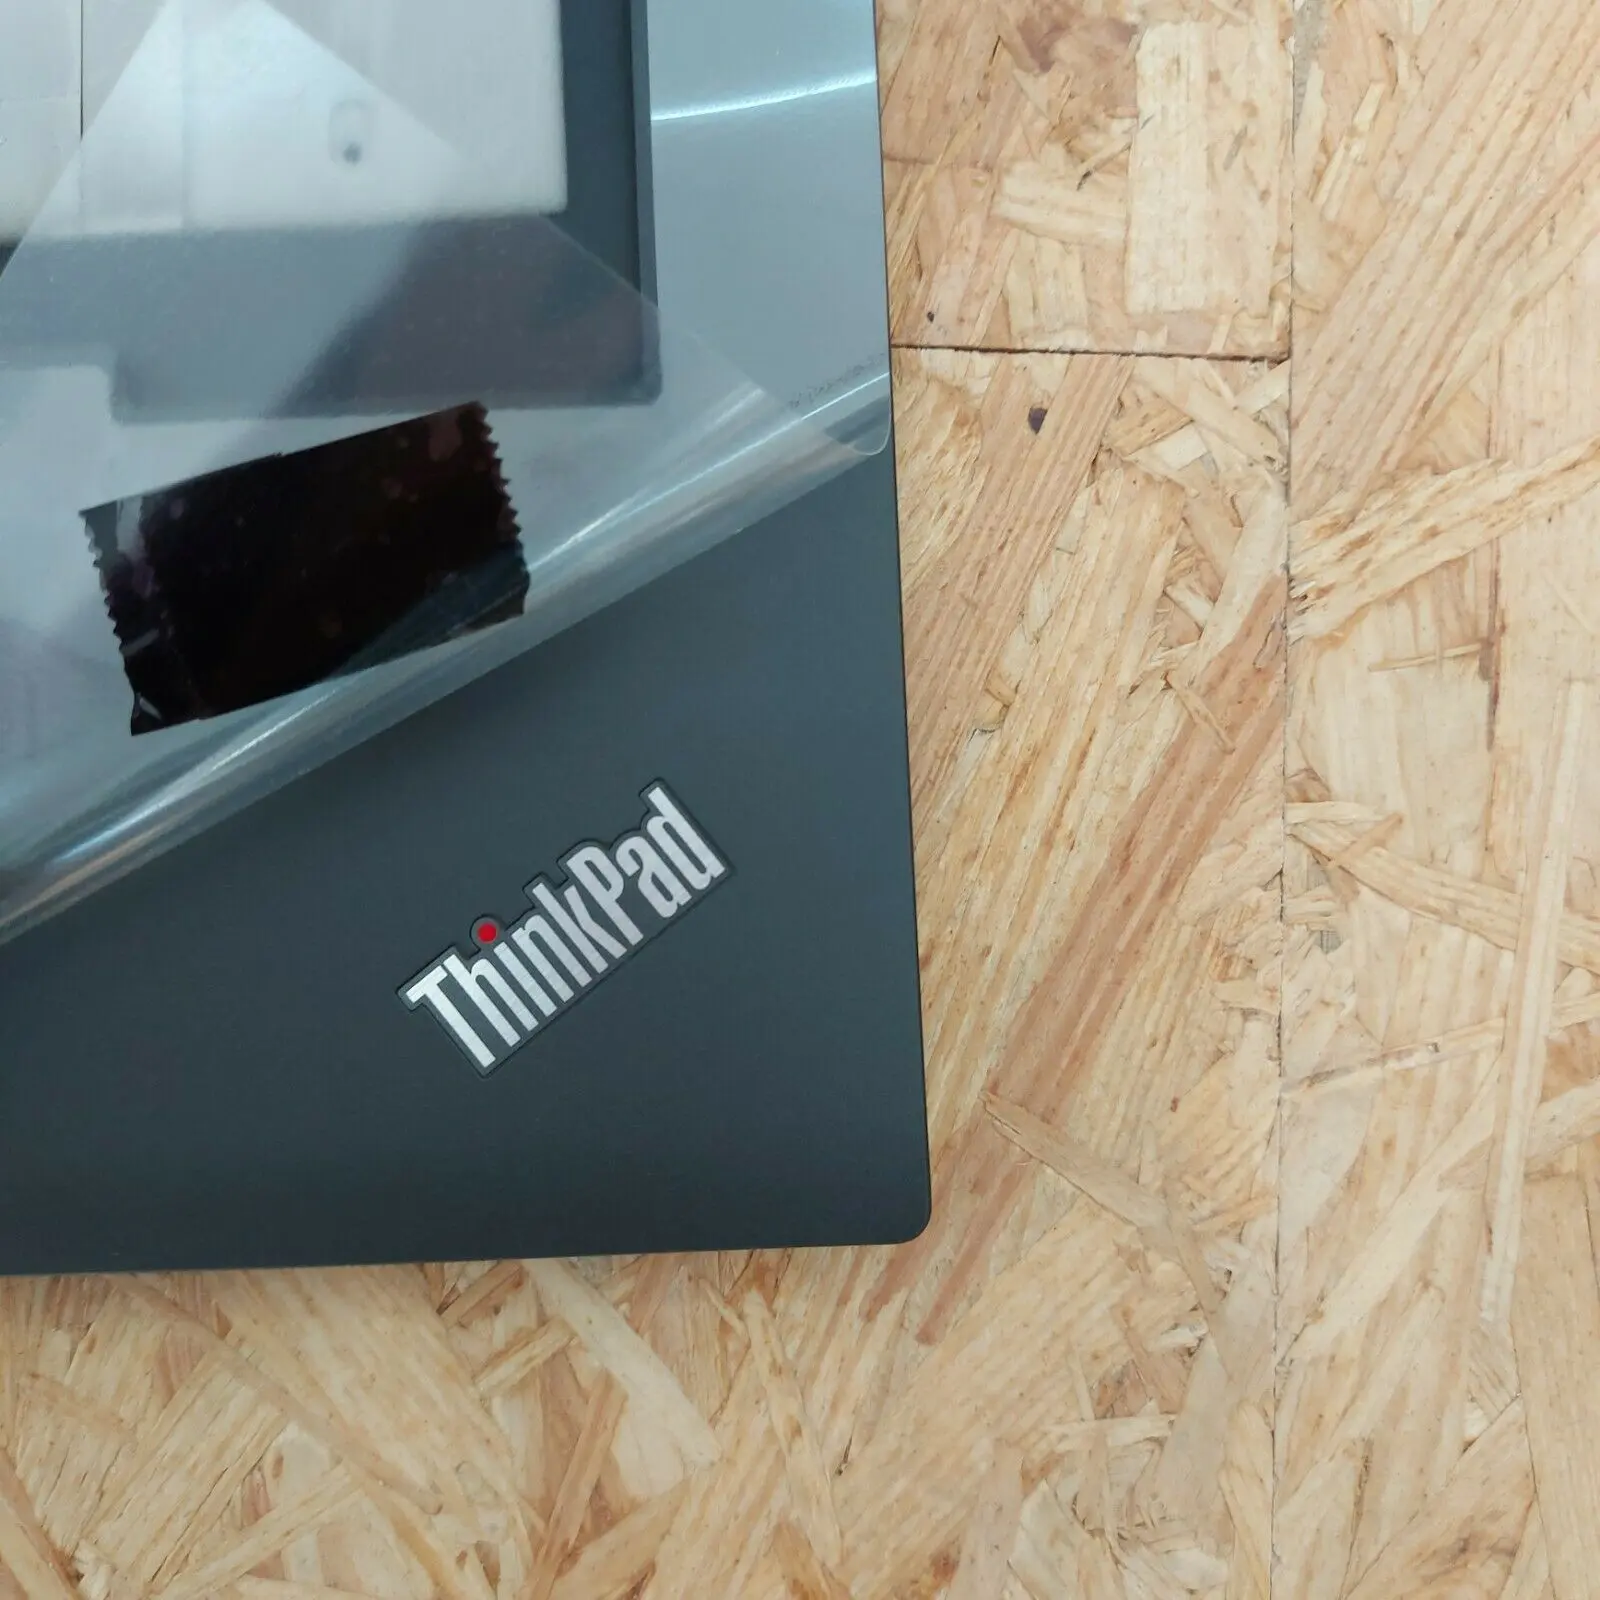 Lenovo Thinkpad Ersatzteil Palmrest T440 ohne Fingerprint 04X5469 Refurbished